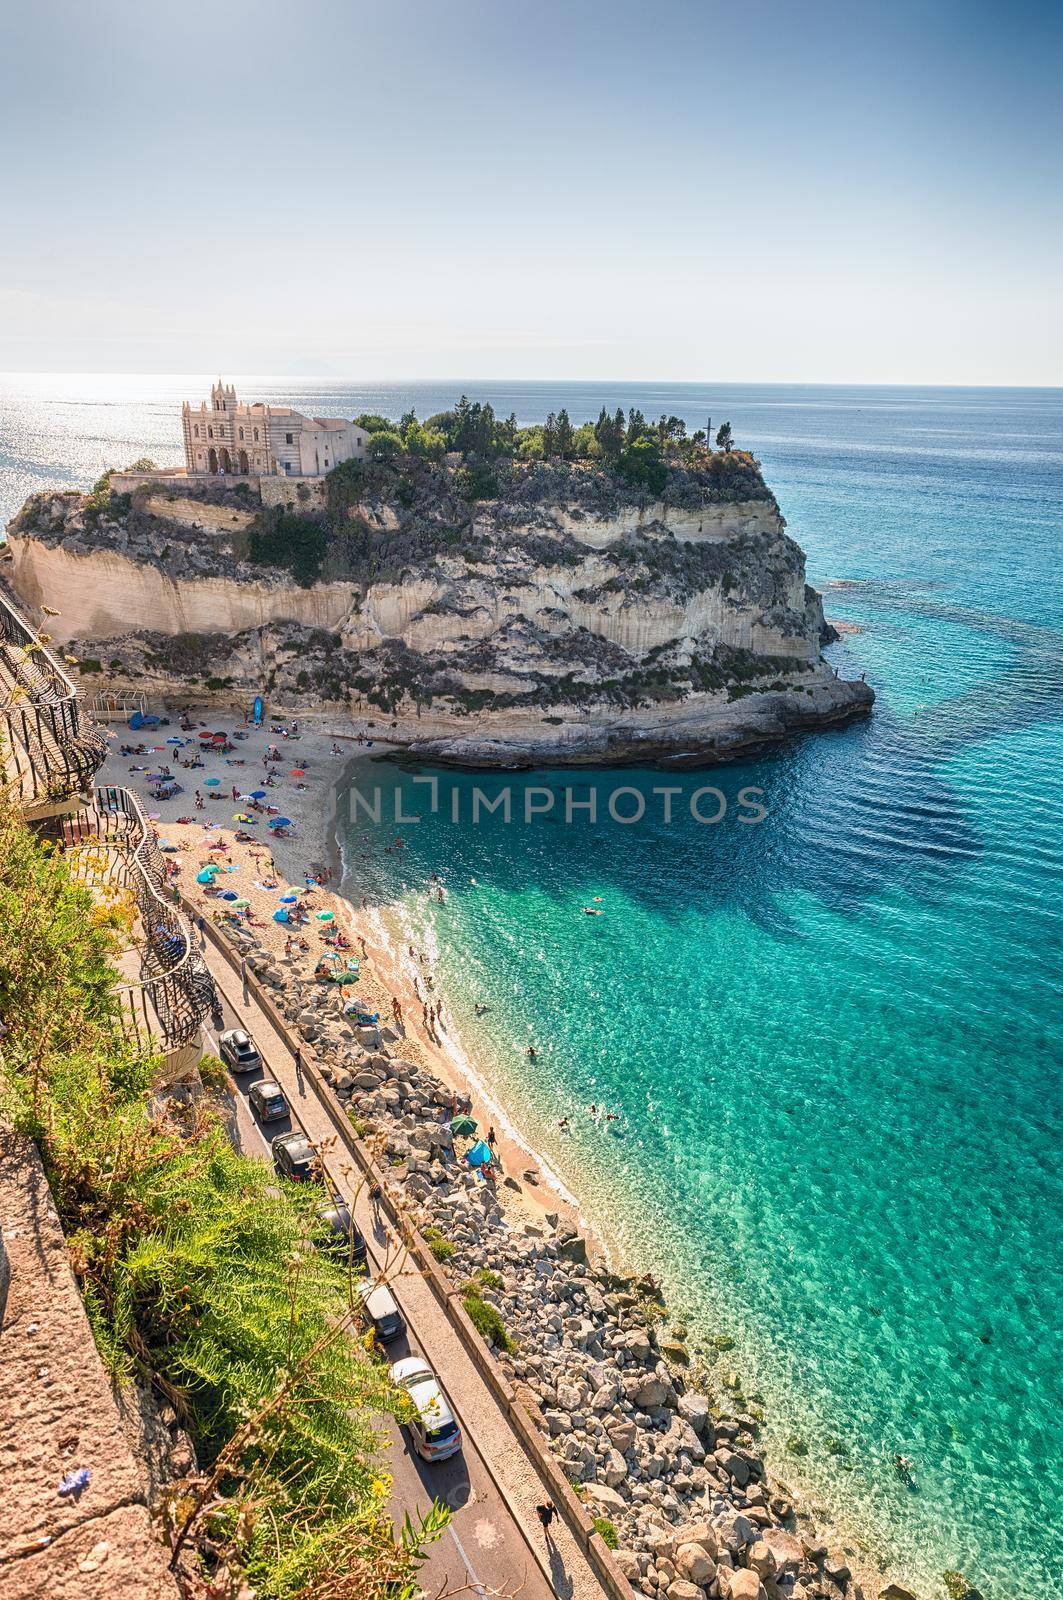 View over Isola Bella Beach, Tropea, Italy by marcorubino